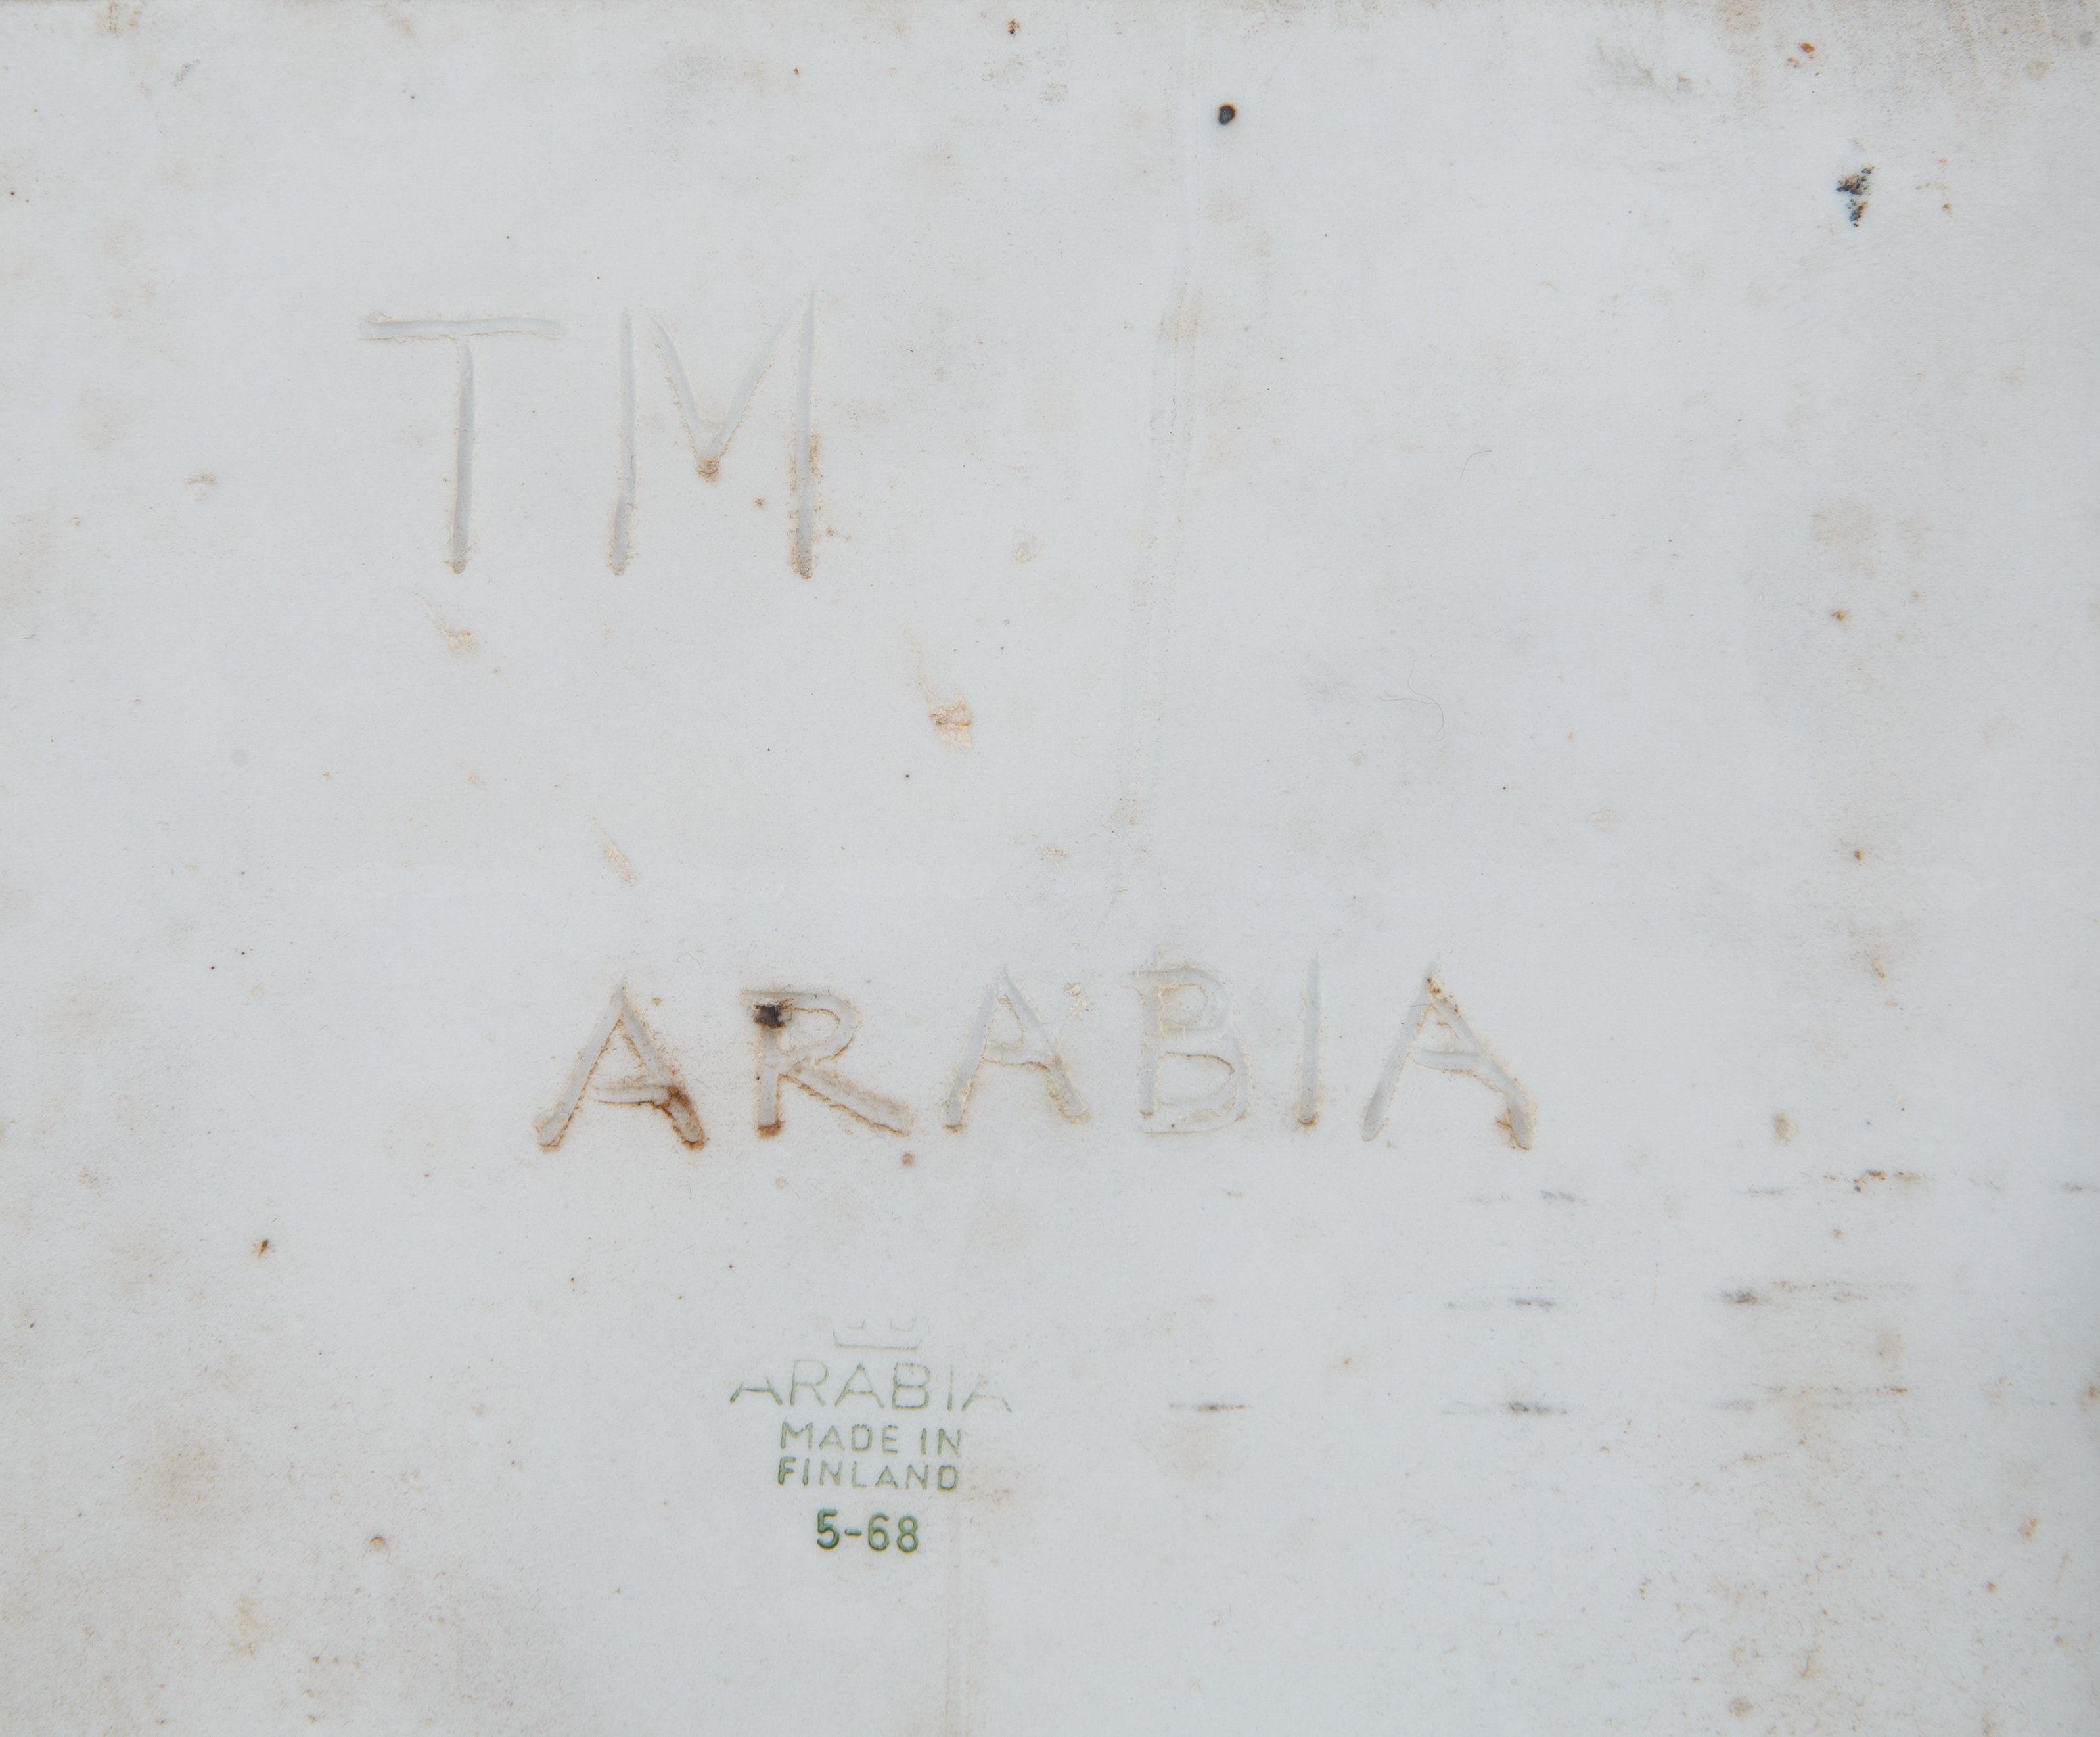 TOINI MUONA (FINNISH 1904-1987) FOR ARABIA - Image 2 of 4